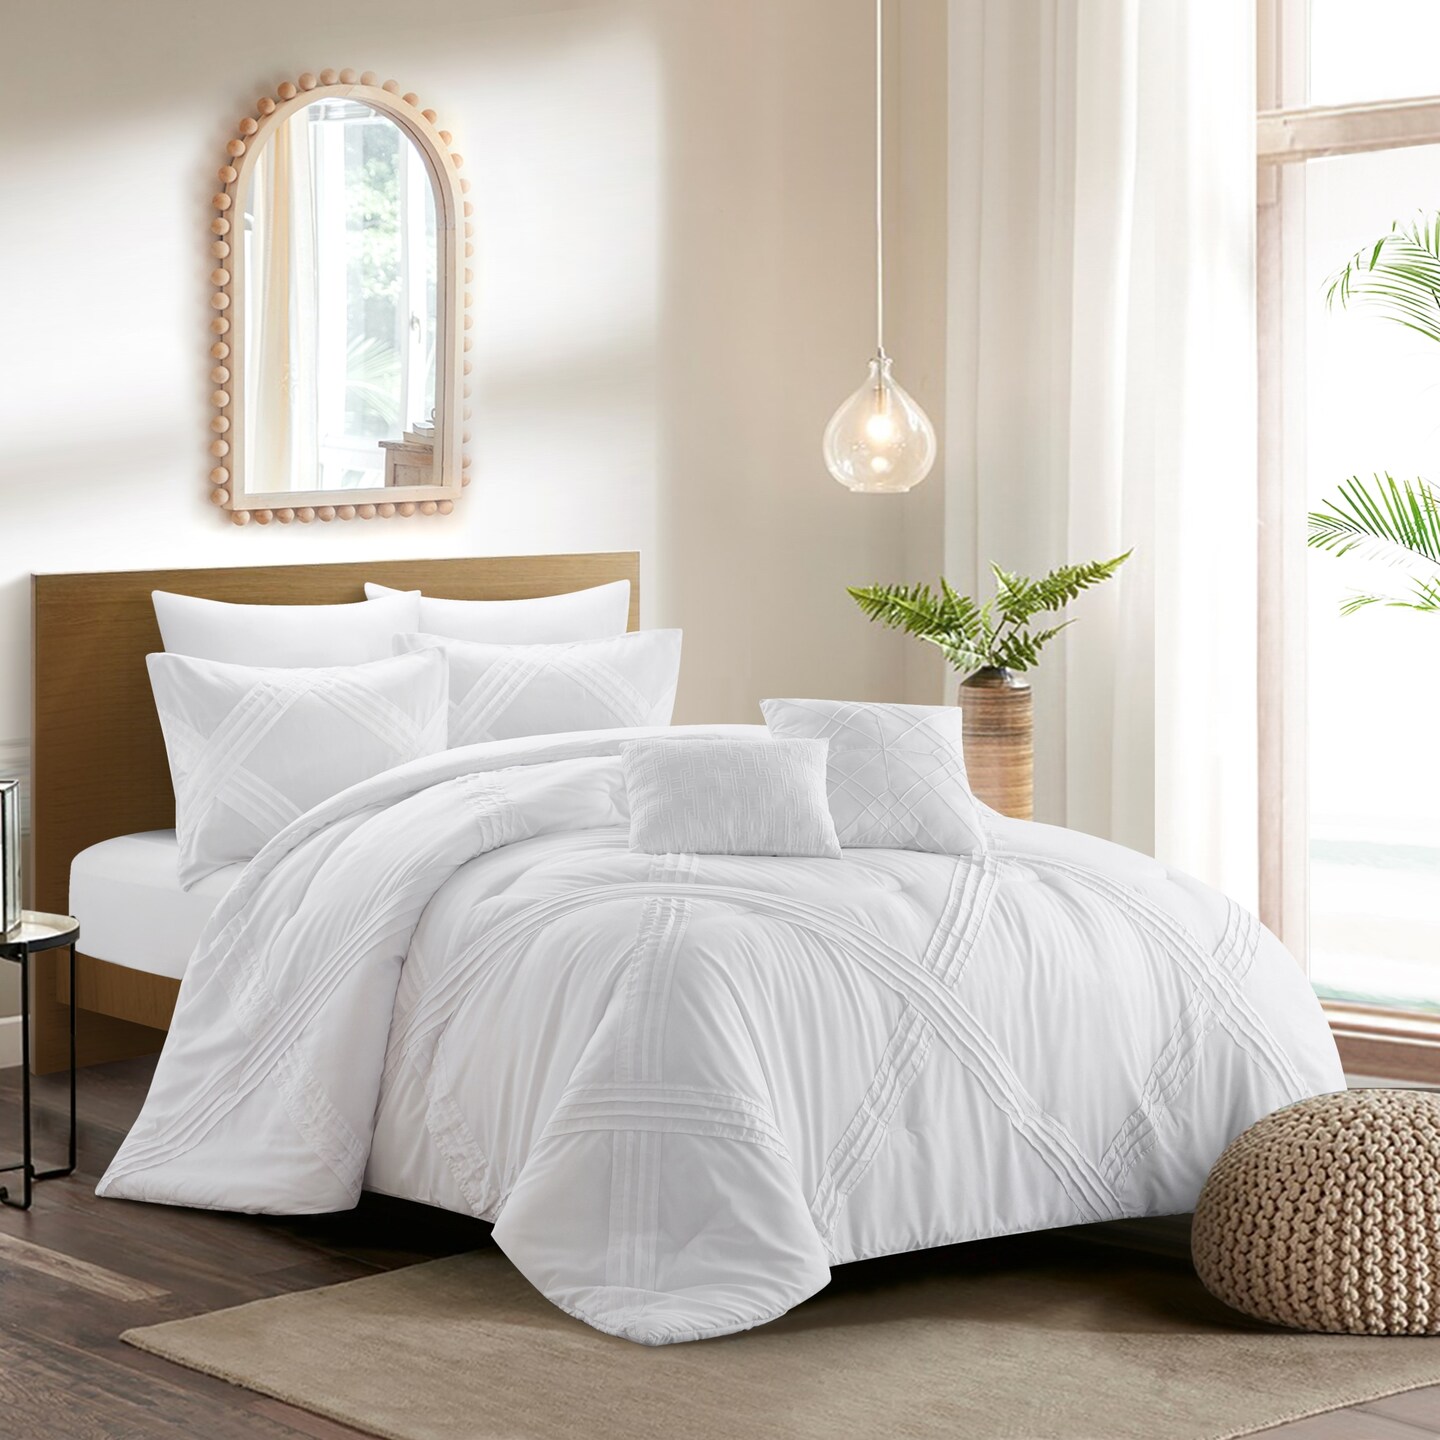 Ozzy 5pc Comforter Set With 2 Pillow Shams, 2 Decorative Pillows, 1 Comforter